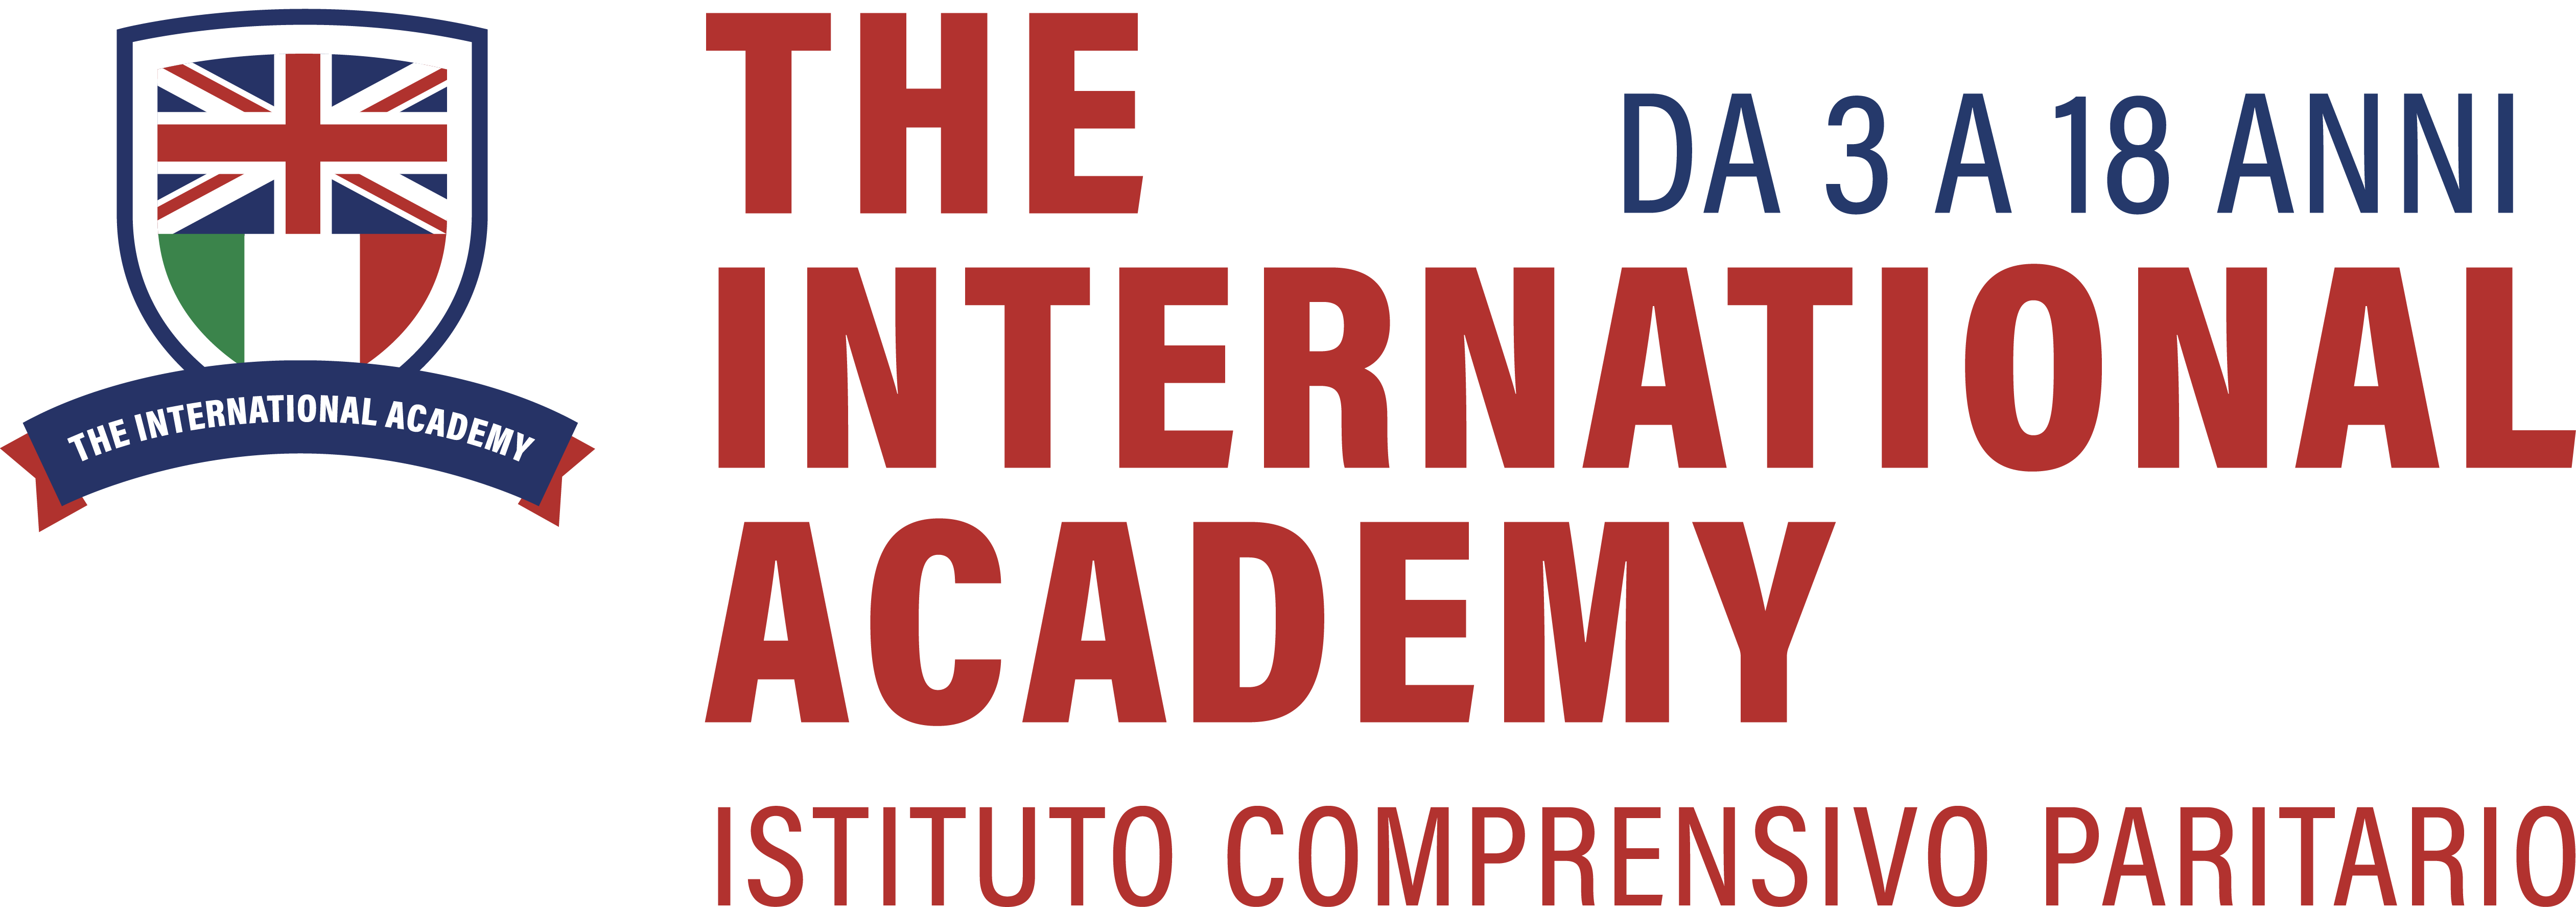 The International Academy